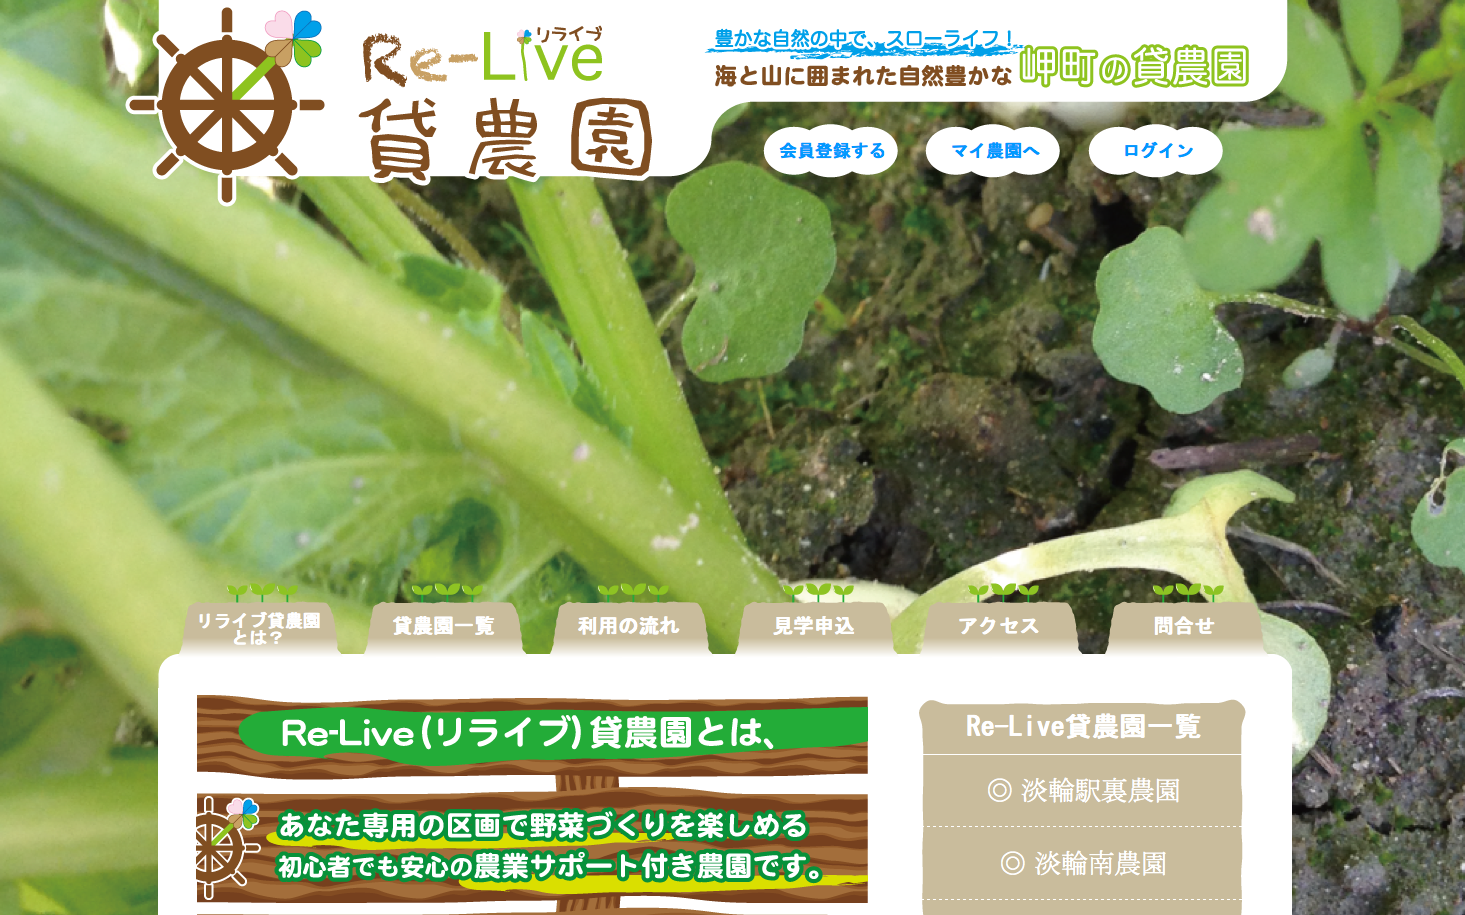 Re-Live貸農園のホームページ